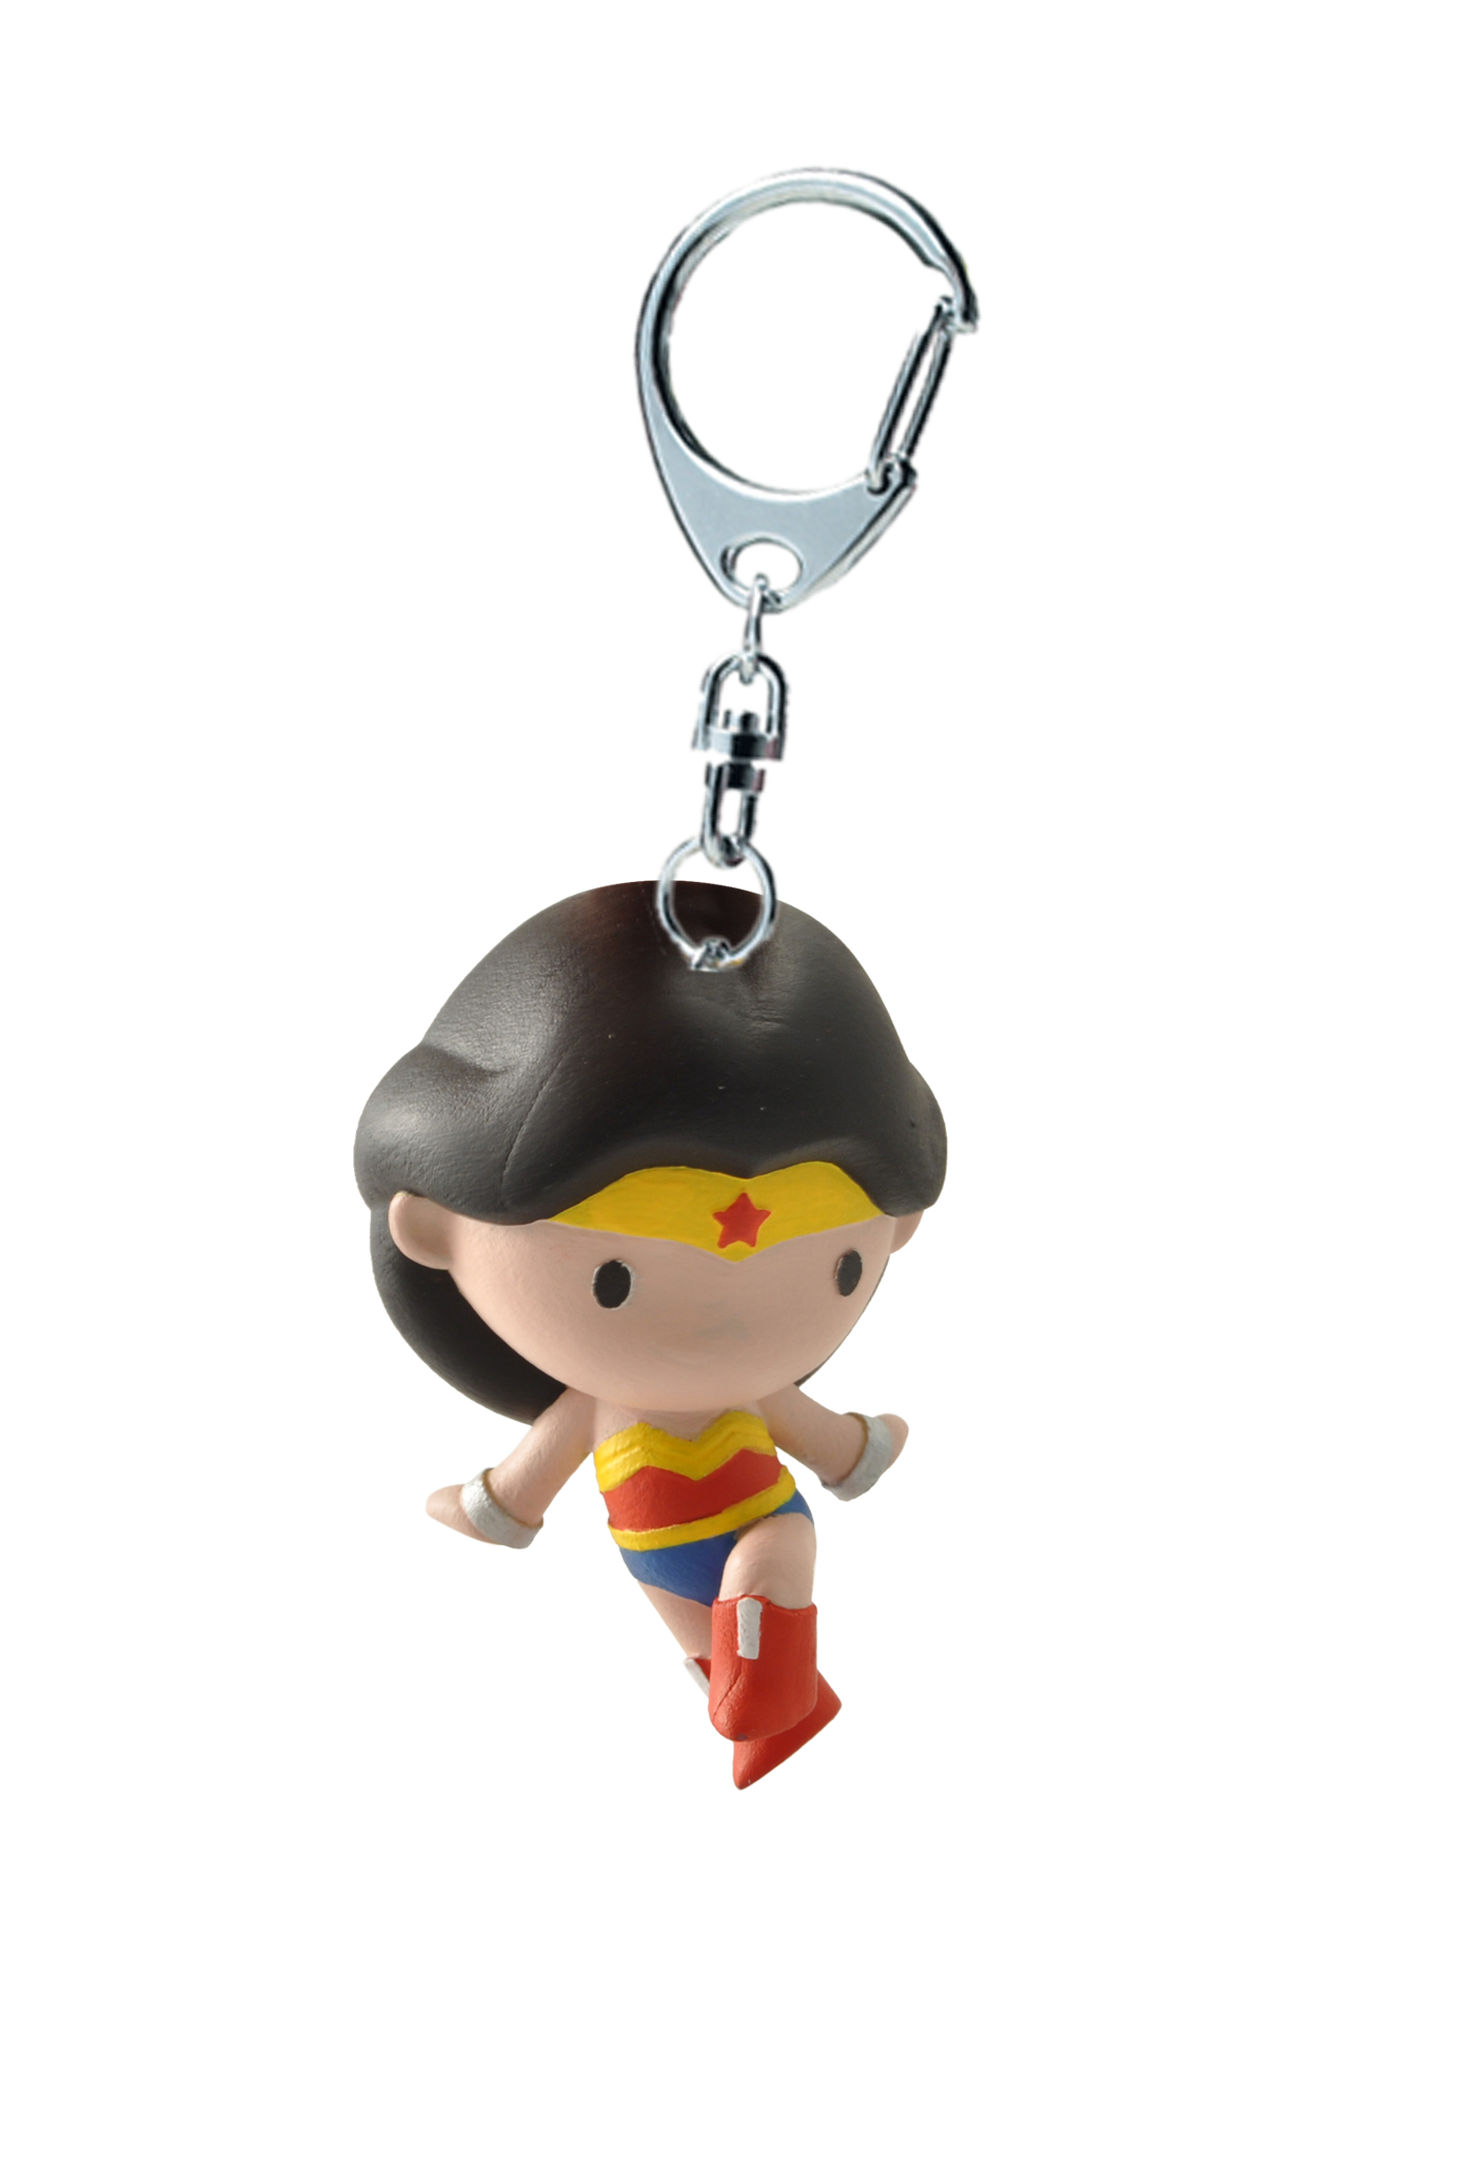 Details about   DC Comics Justice League Wonder Woman Sword Alloy Key Chains Keychain Keyring 